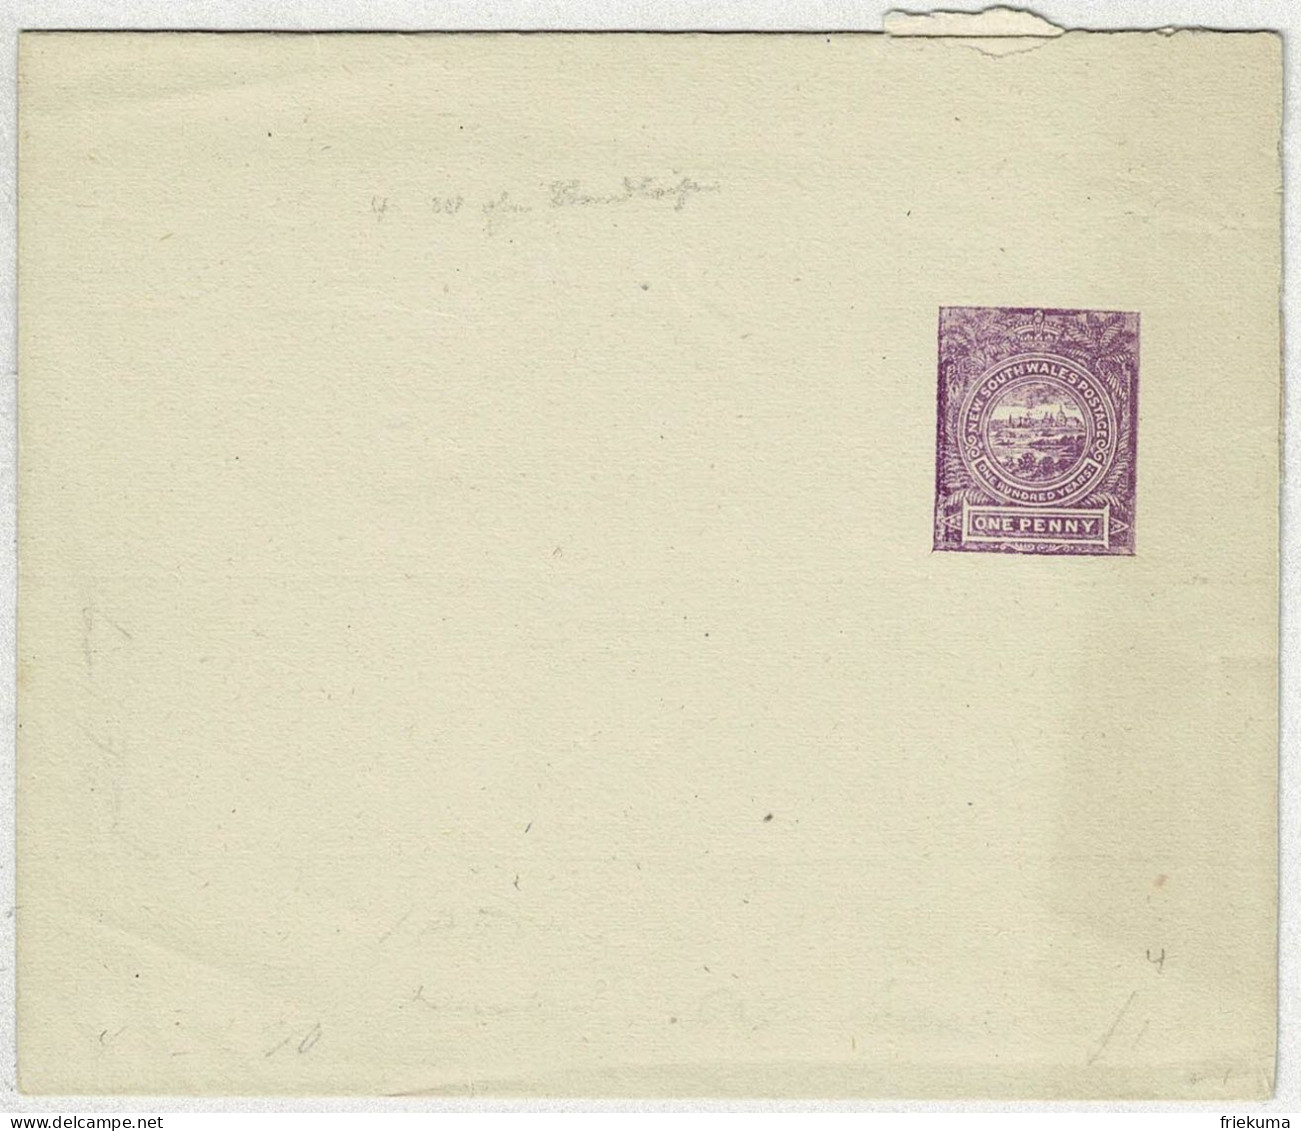 Neusüdwales / New South Wales, Ganzsachenumschlag / Stationery - Briefe U. Dokumente